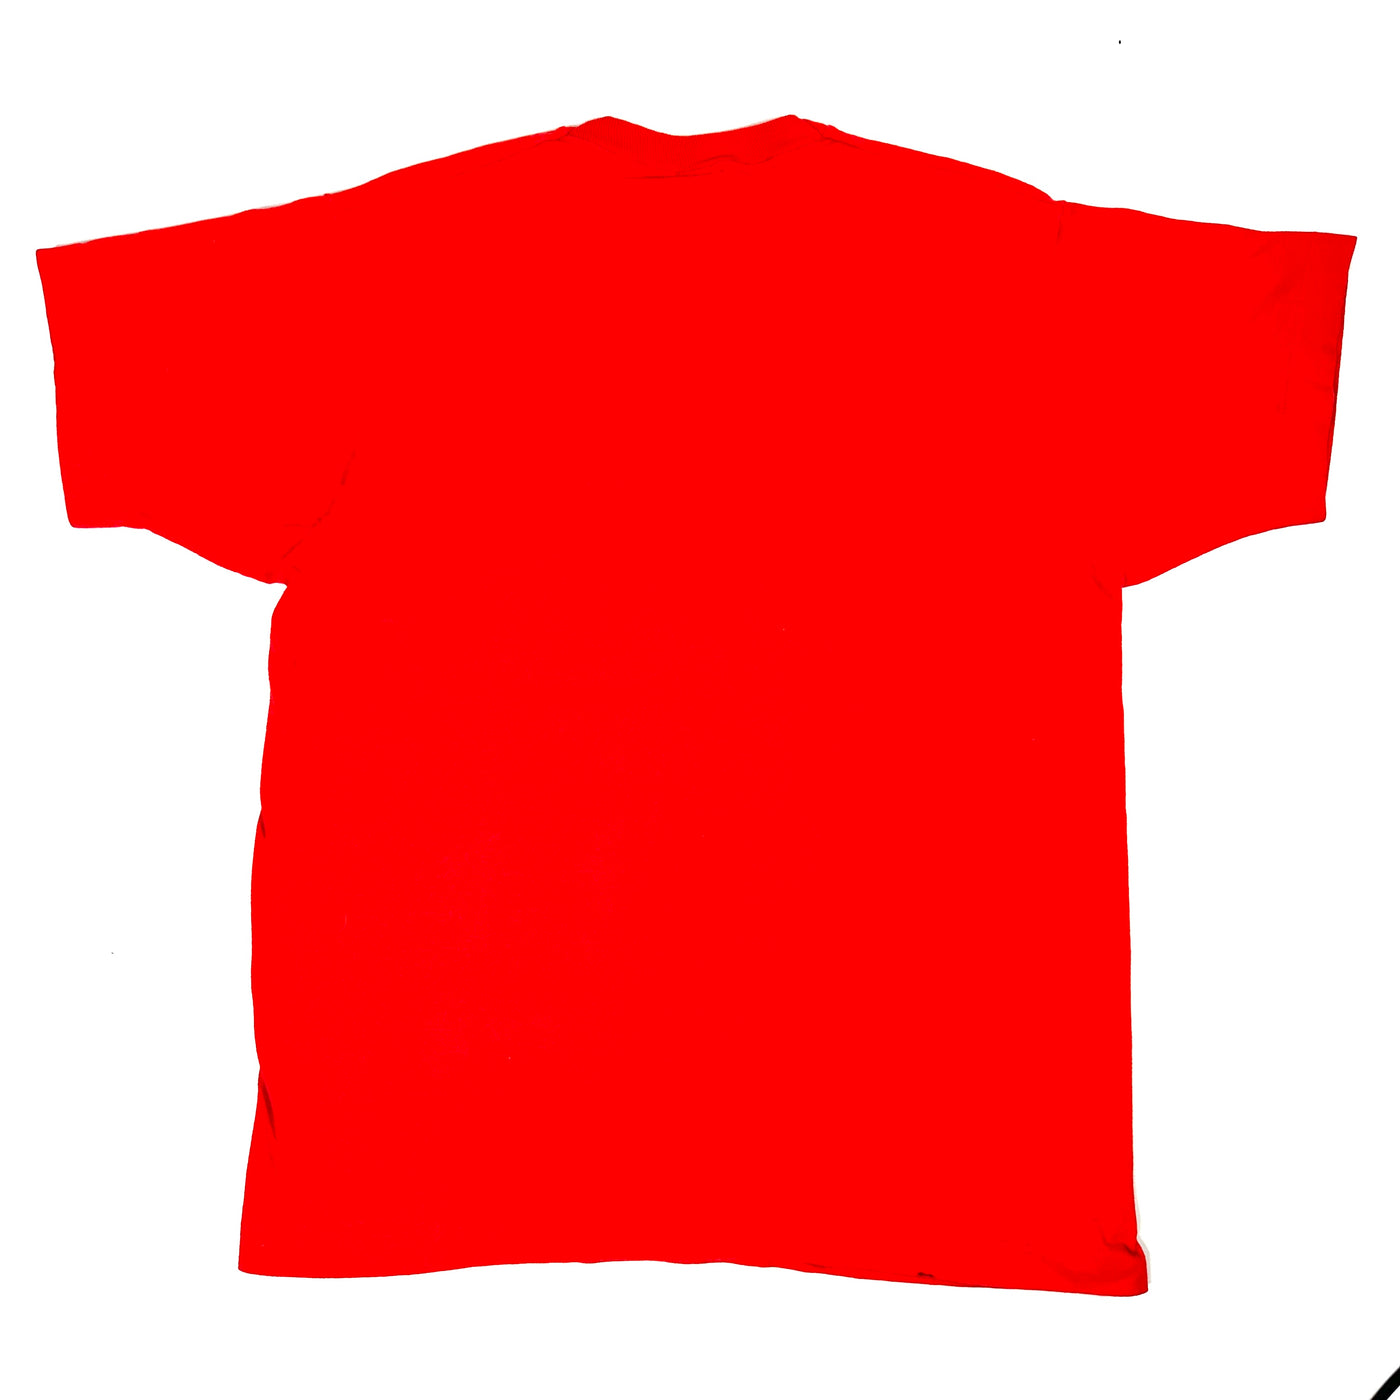 '91 Chicago Bulls World Champions Red Sports T-Shirt sz XL